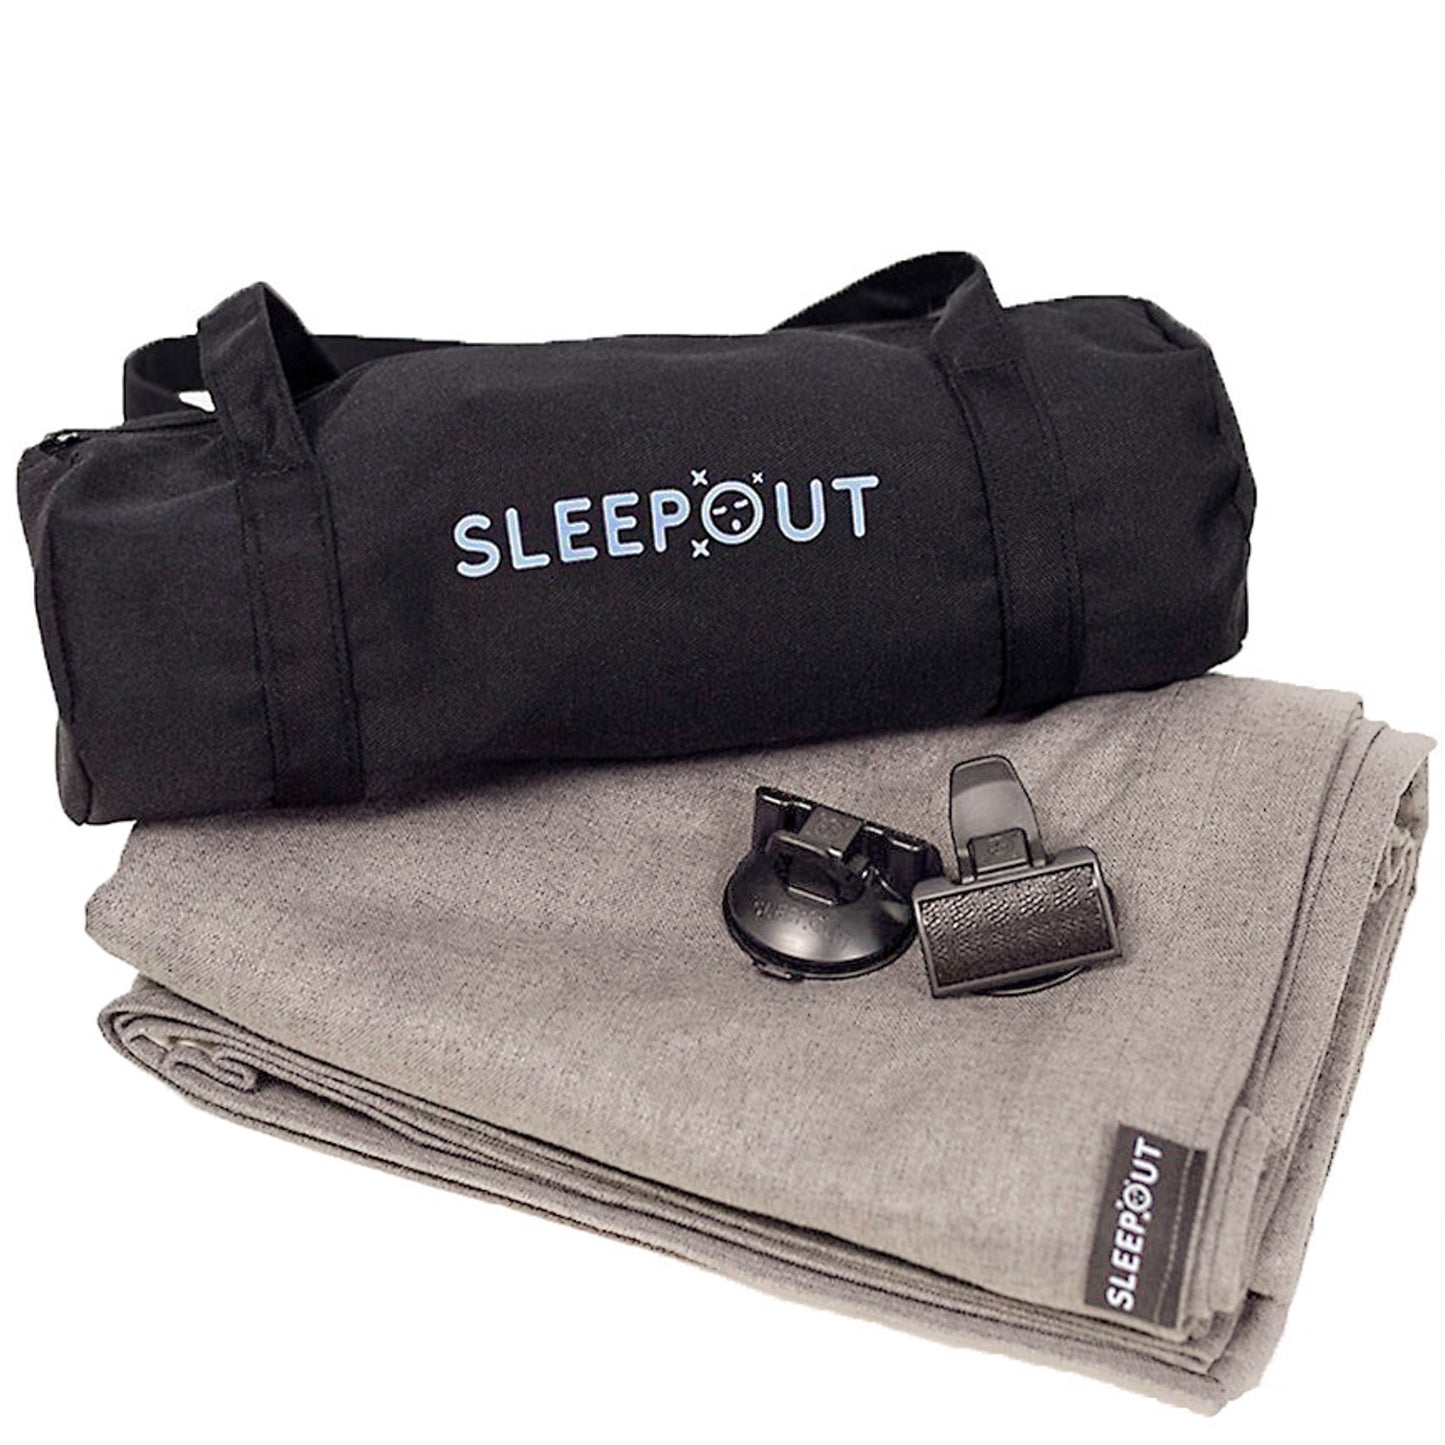 The Sleepout Portable Blackout Curtain 2.0